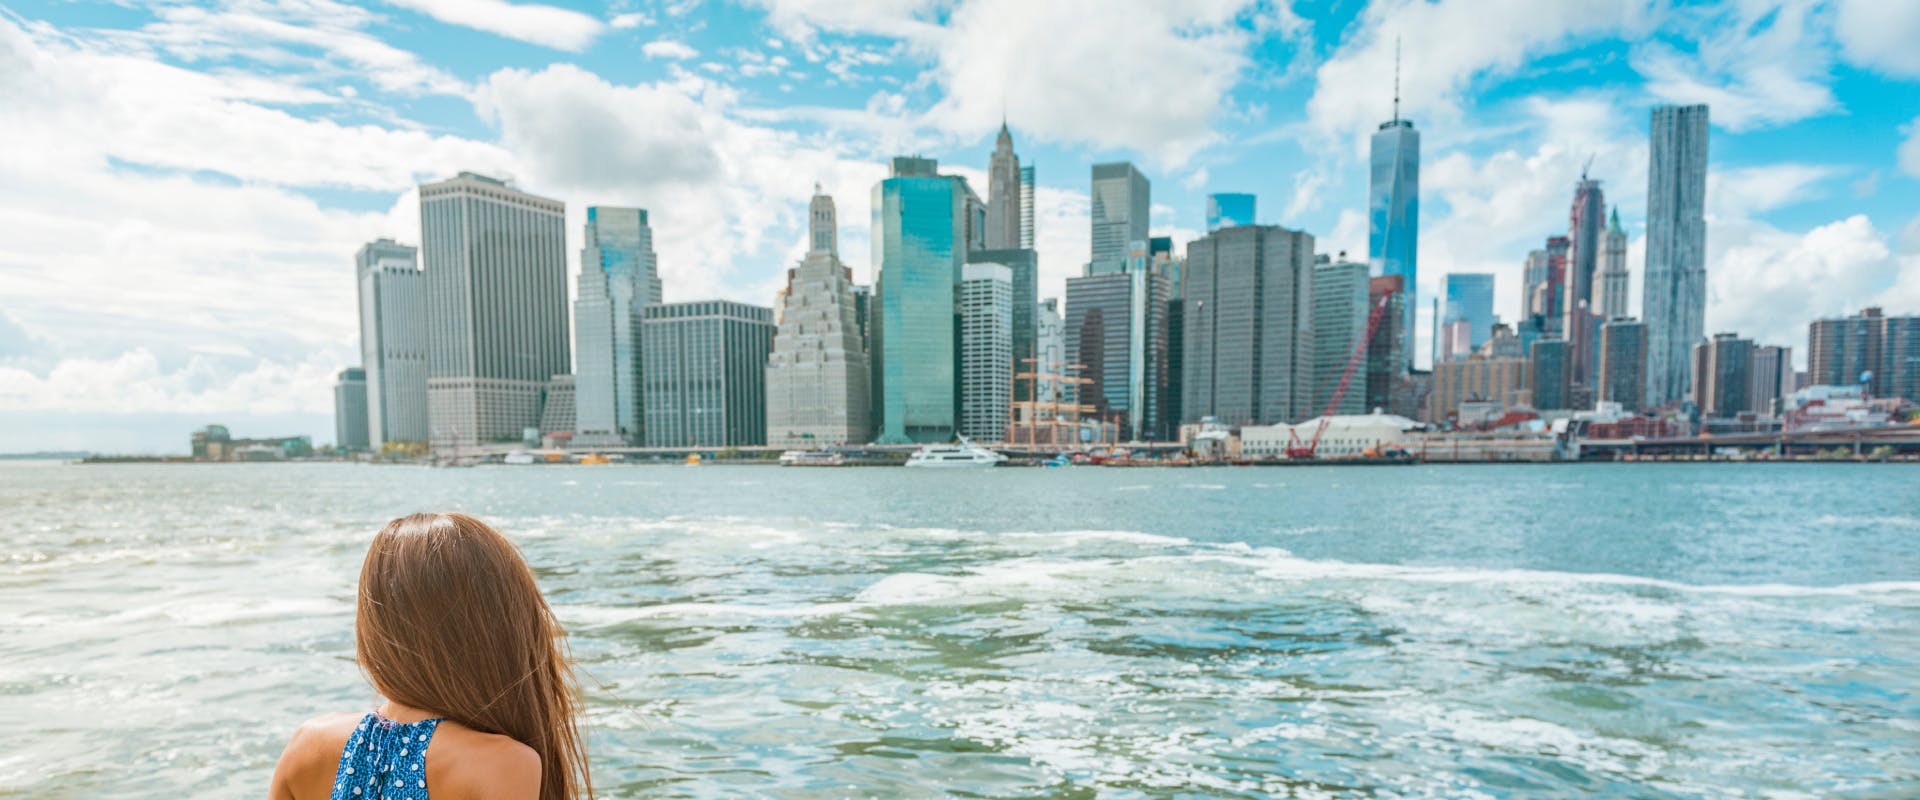 A solo female traveler in New York, USA.